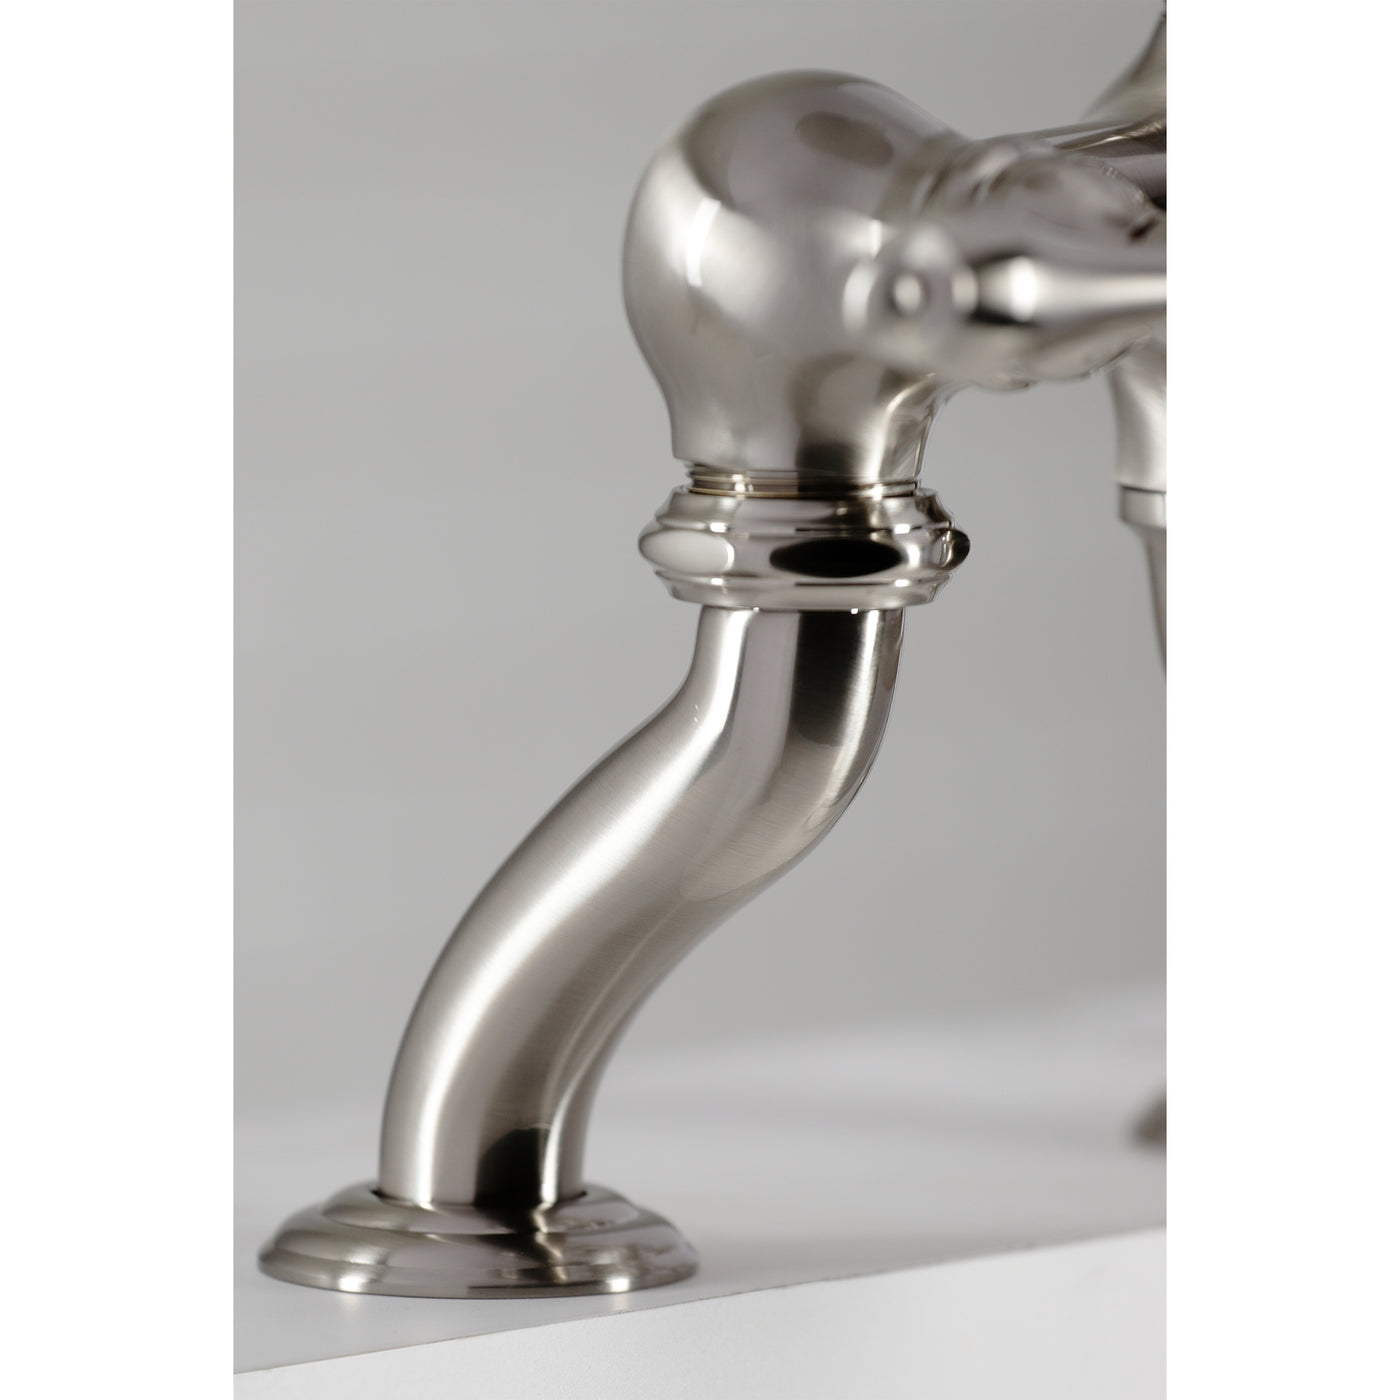 Elements of Design DT4098AL 7-Inch Deck Mount Tub Faucet with Hand Shower, Brushed Nickel